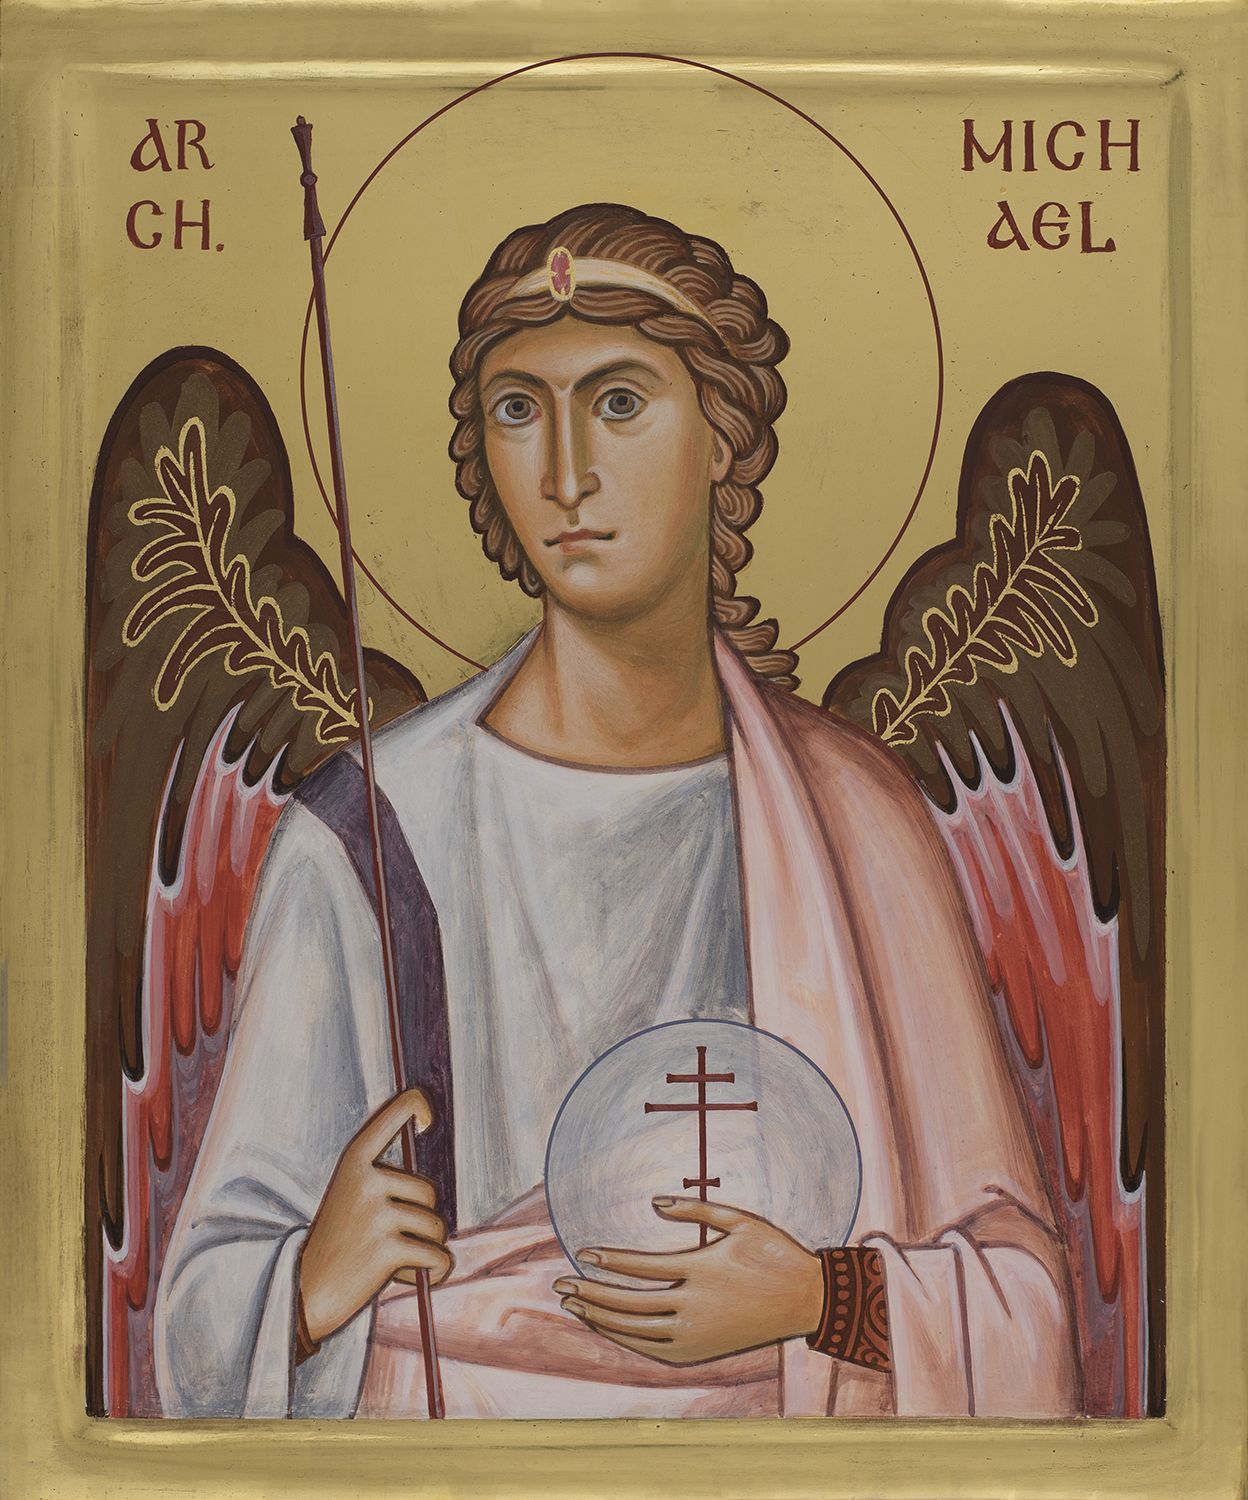 Archangel-Michale by PhuThieu1989 on DeviantArt